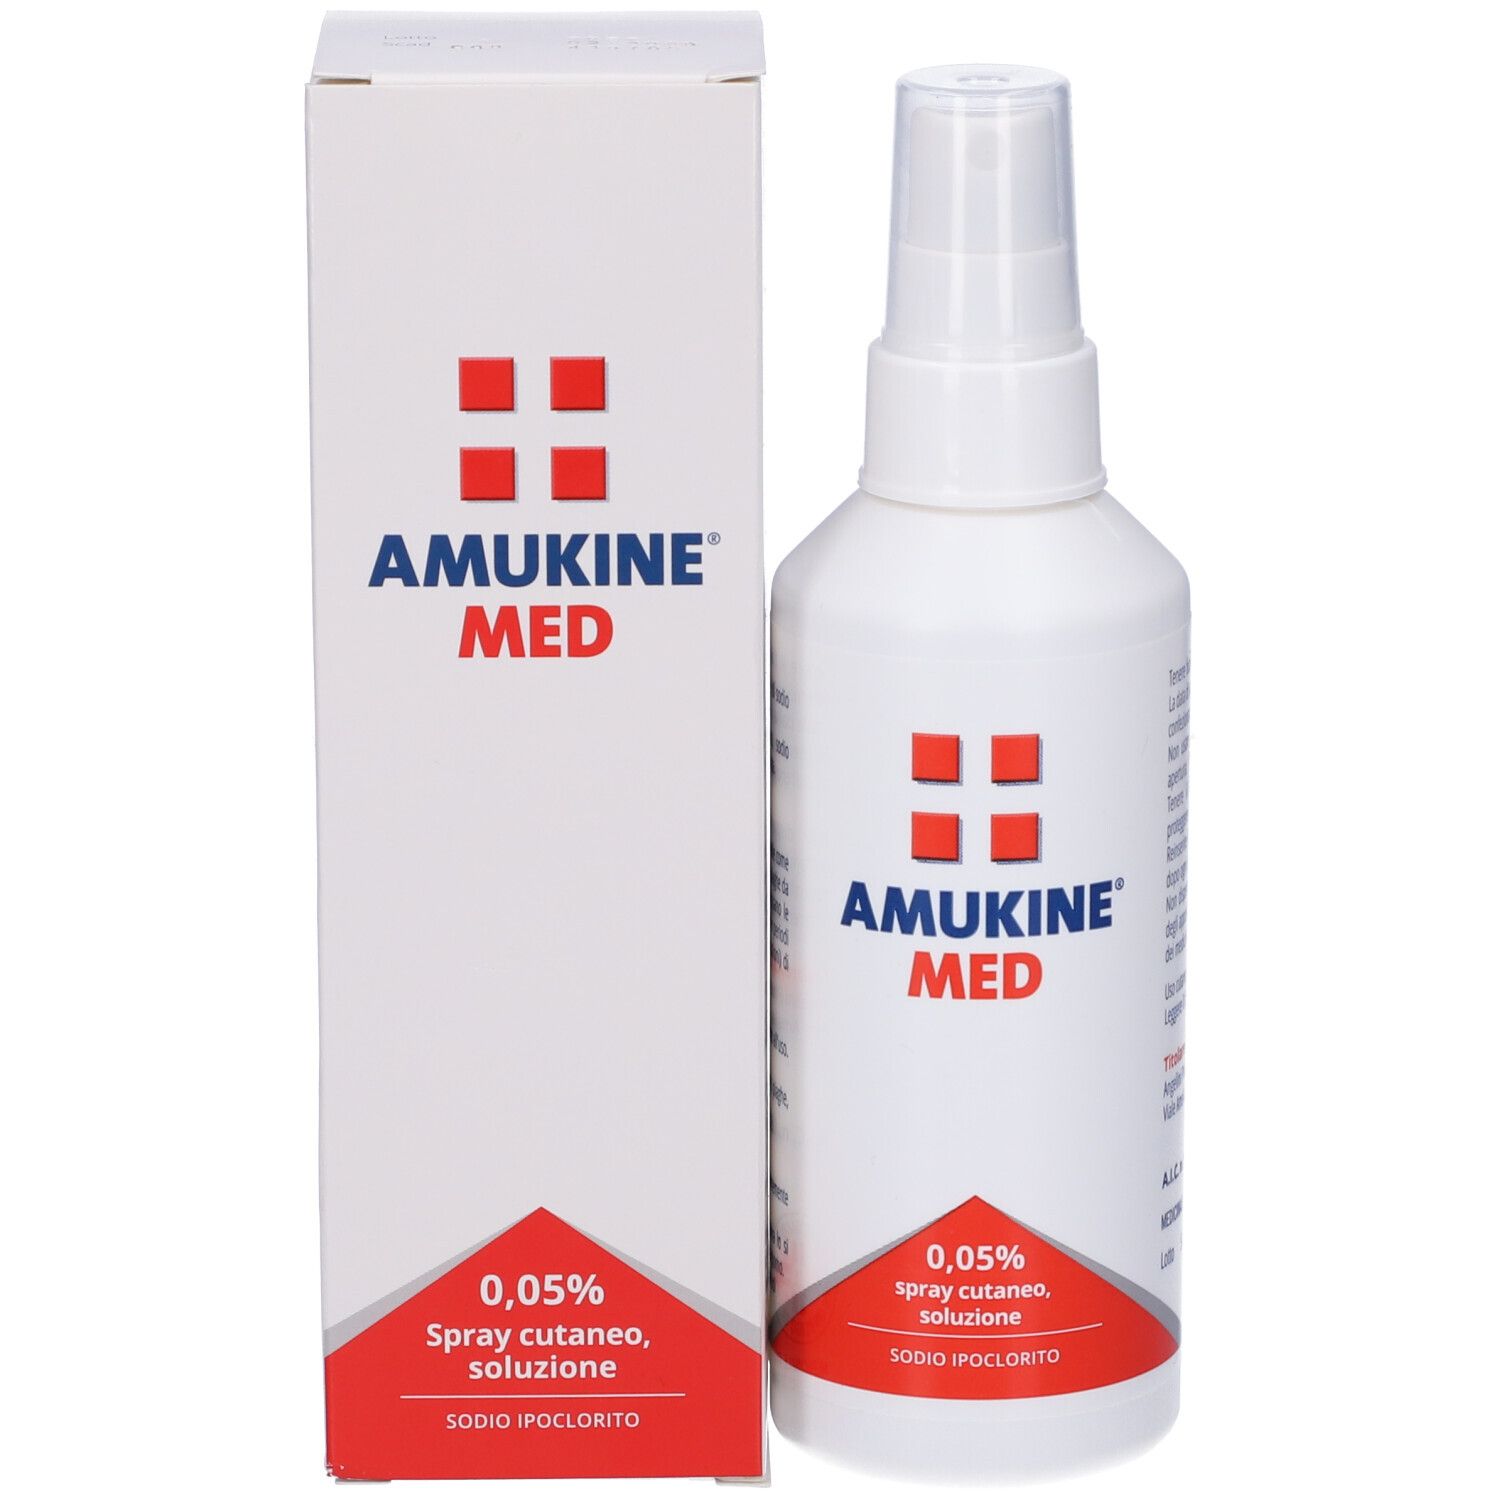 Amukine Med 0,05% Spray Cutaneo 200ml